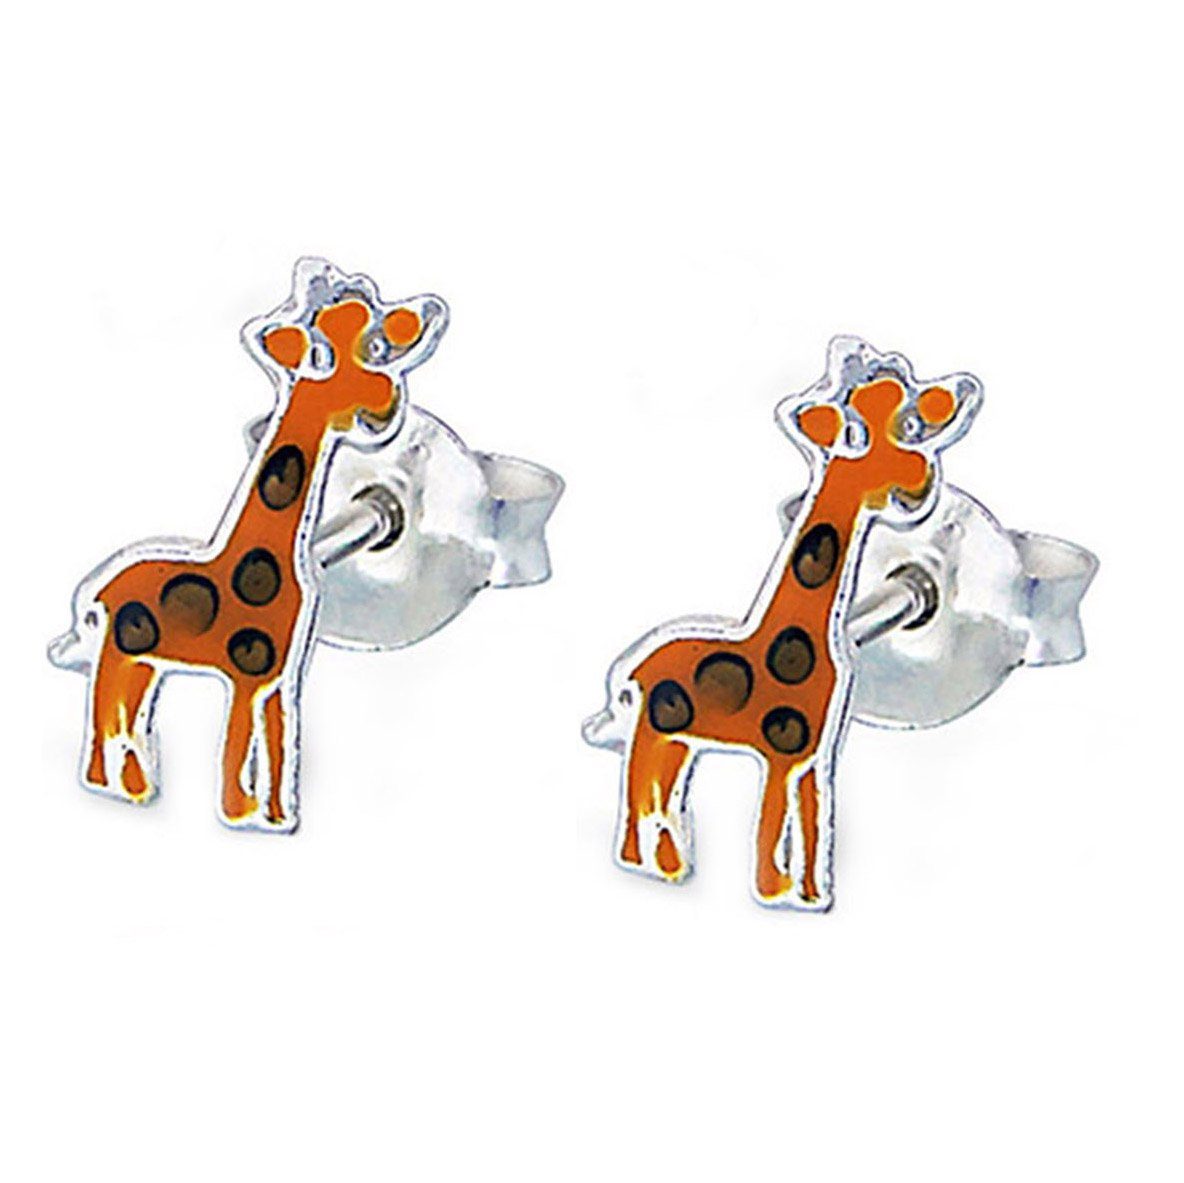 schmuck23 Paar Ohrstecker Geschenk Kinderschmuck Silberohrringe Giraffe Kinder Ohrringe echte Silber, Mädchen 925